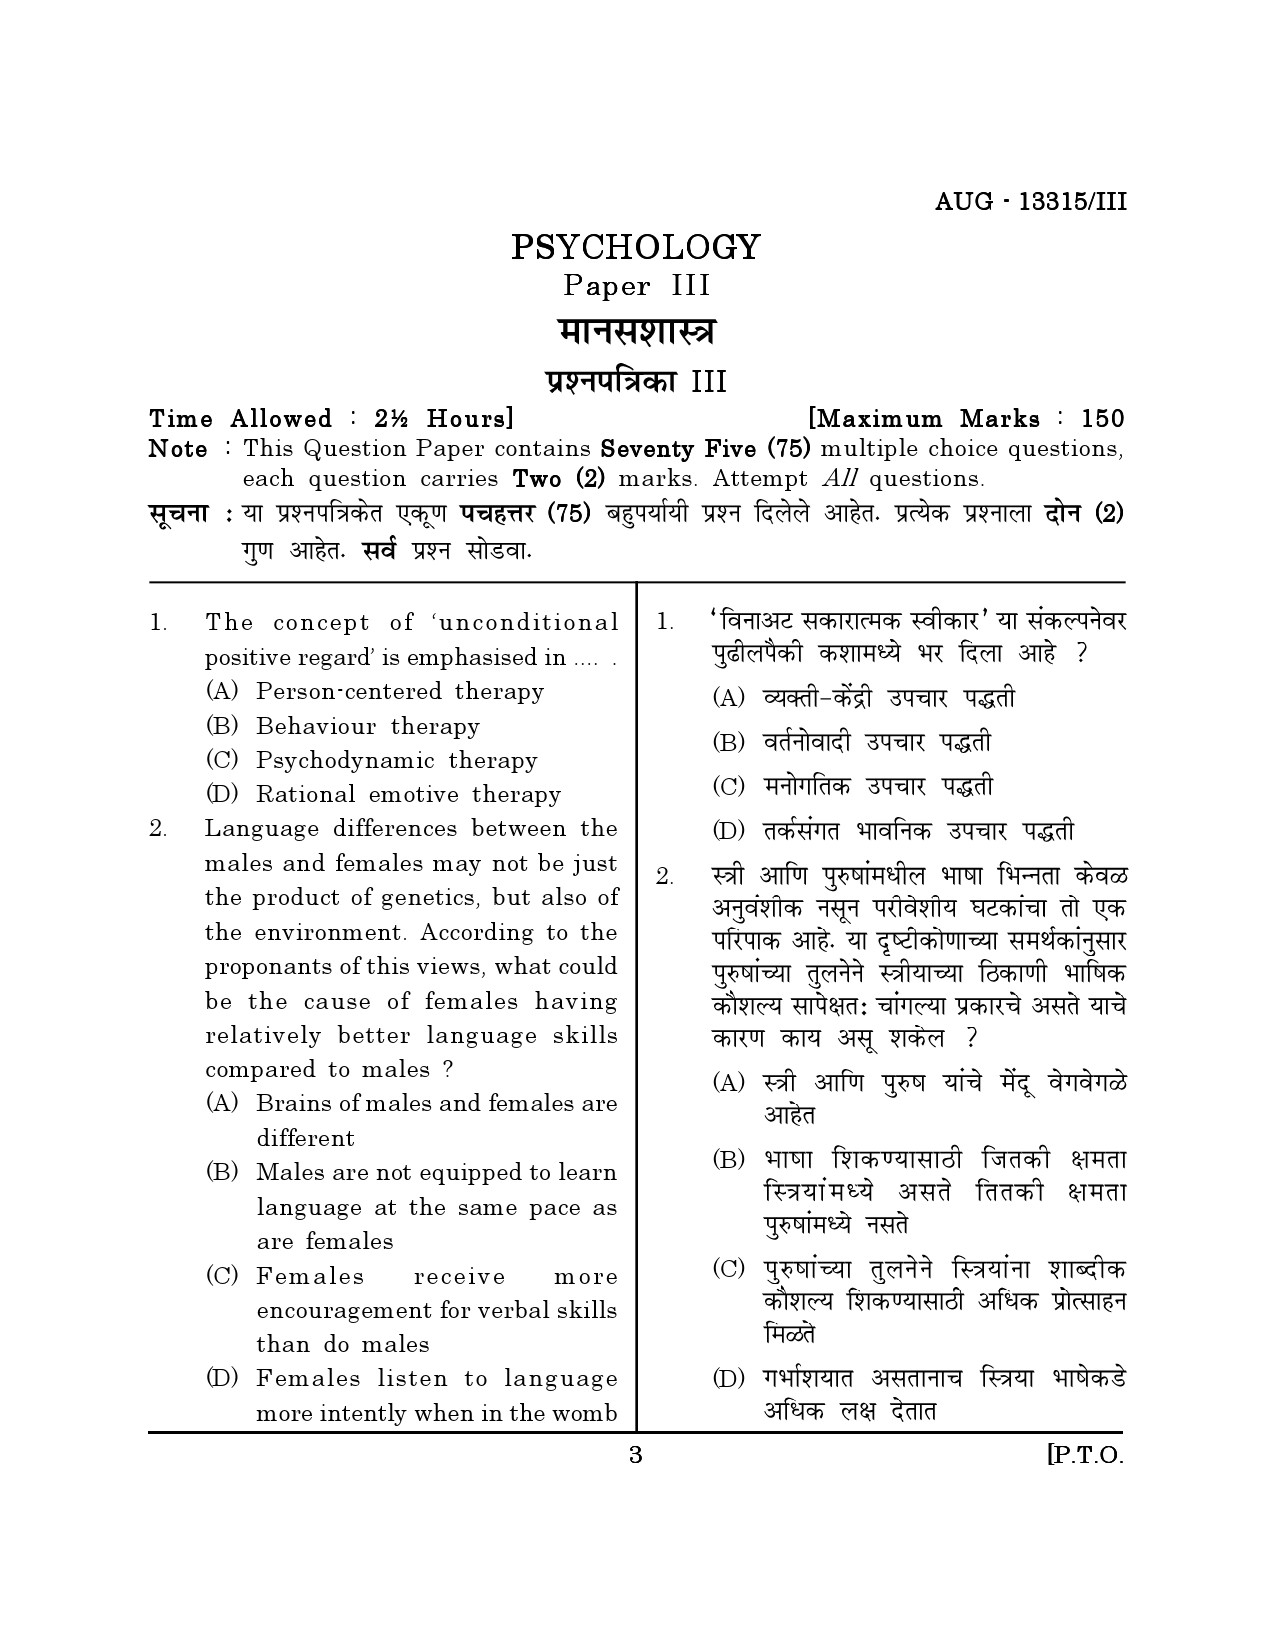 Maharashtra SET Psychology Question Paper III August 2015 2